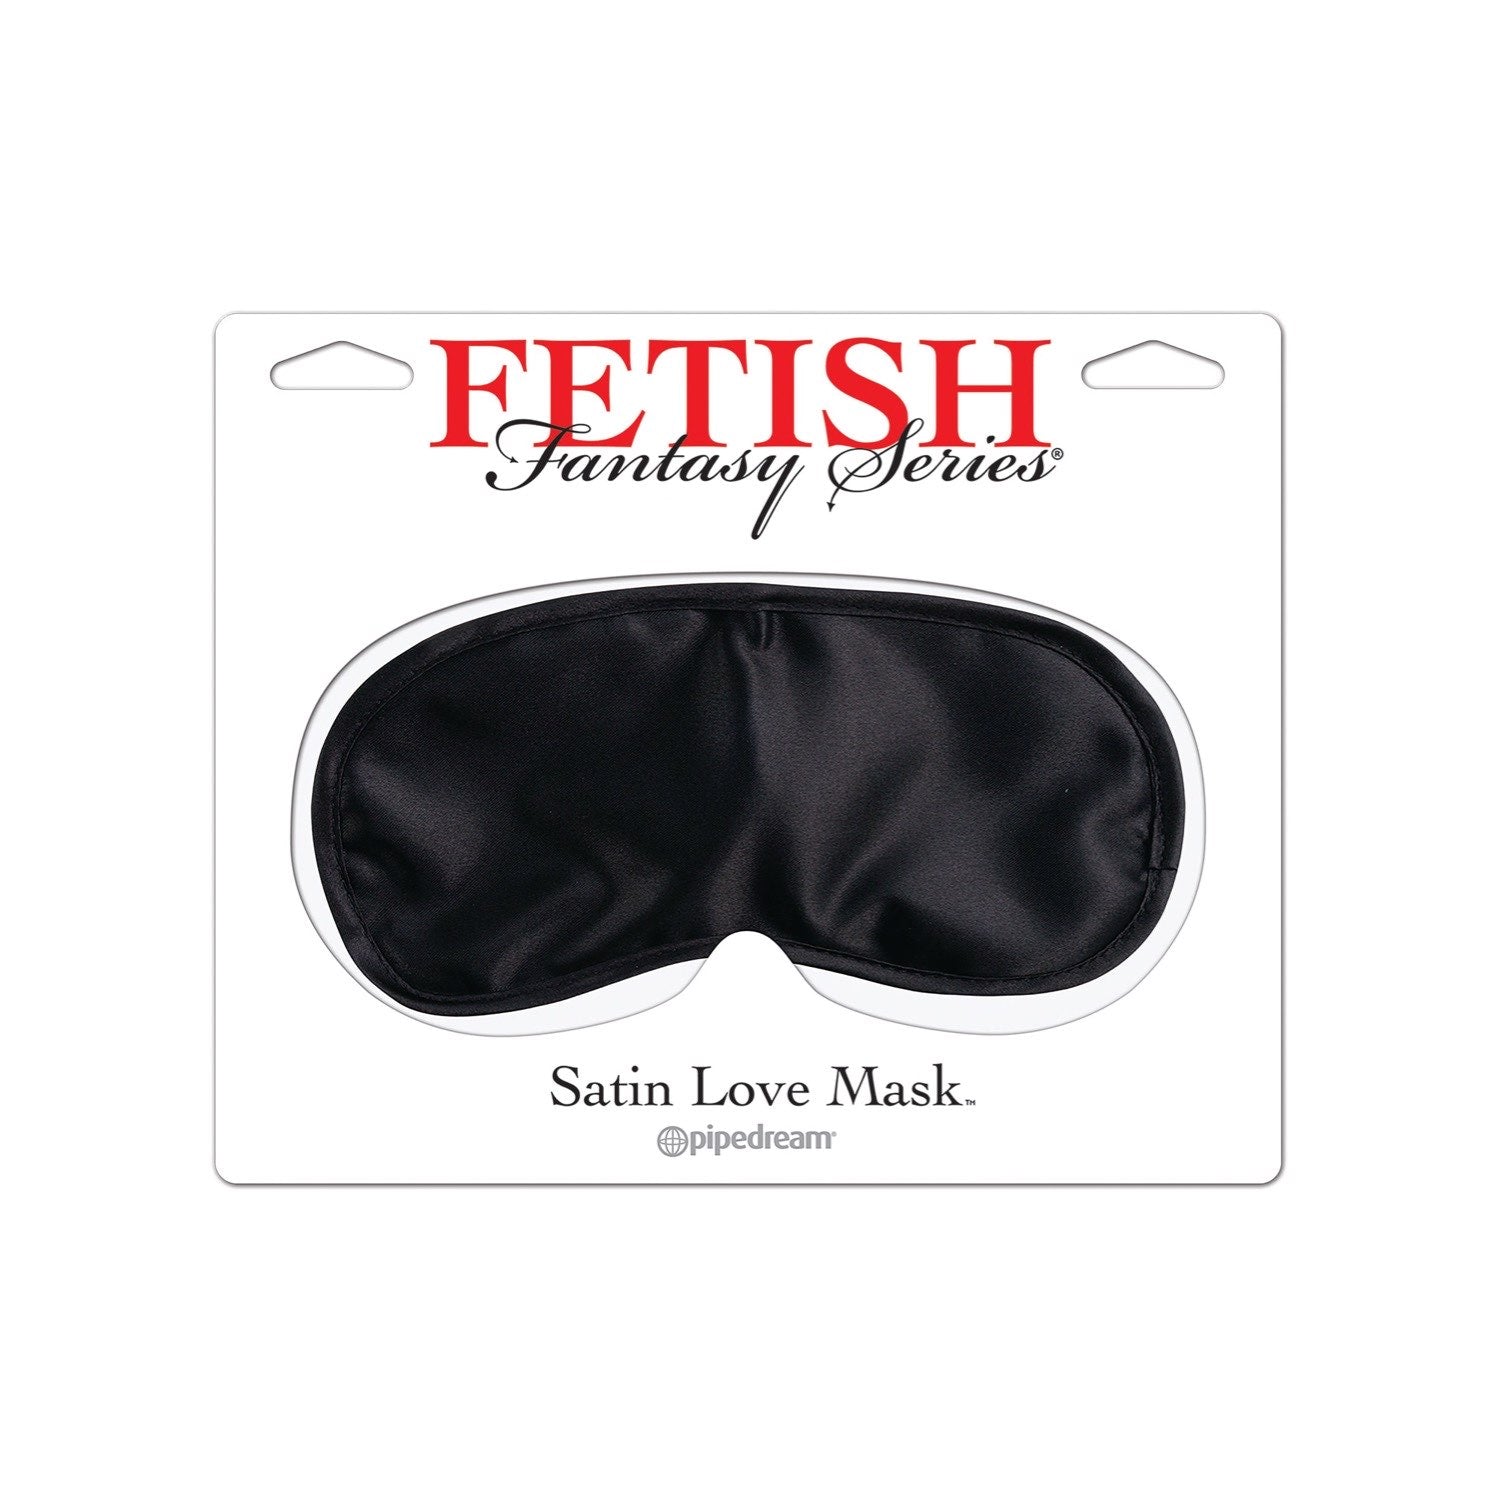 Fetish Fantasy Series Satin Love Mask - Black Eye Mask by Pipedream